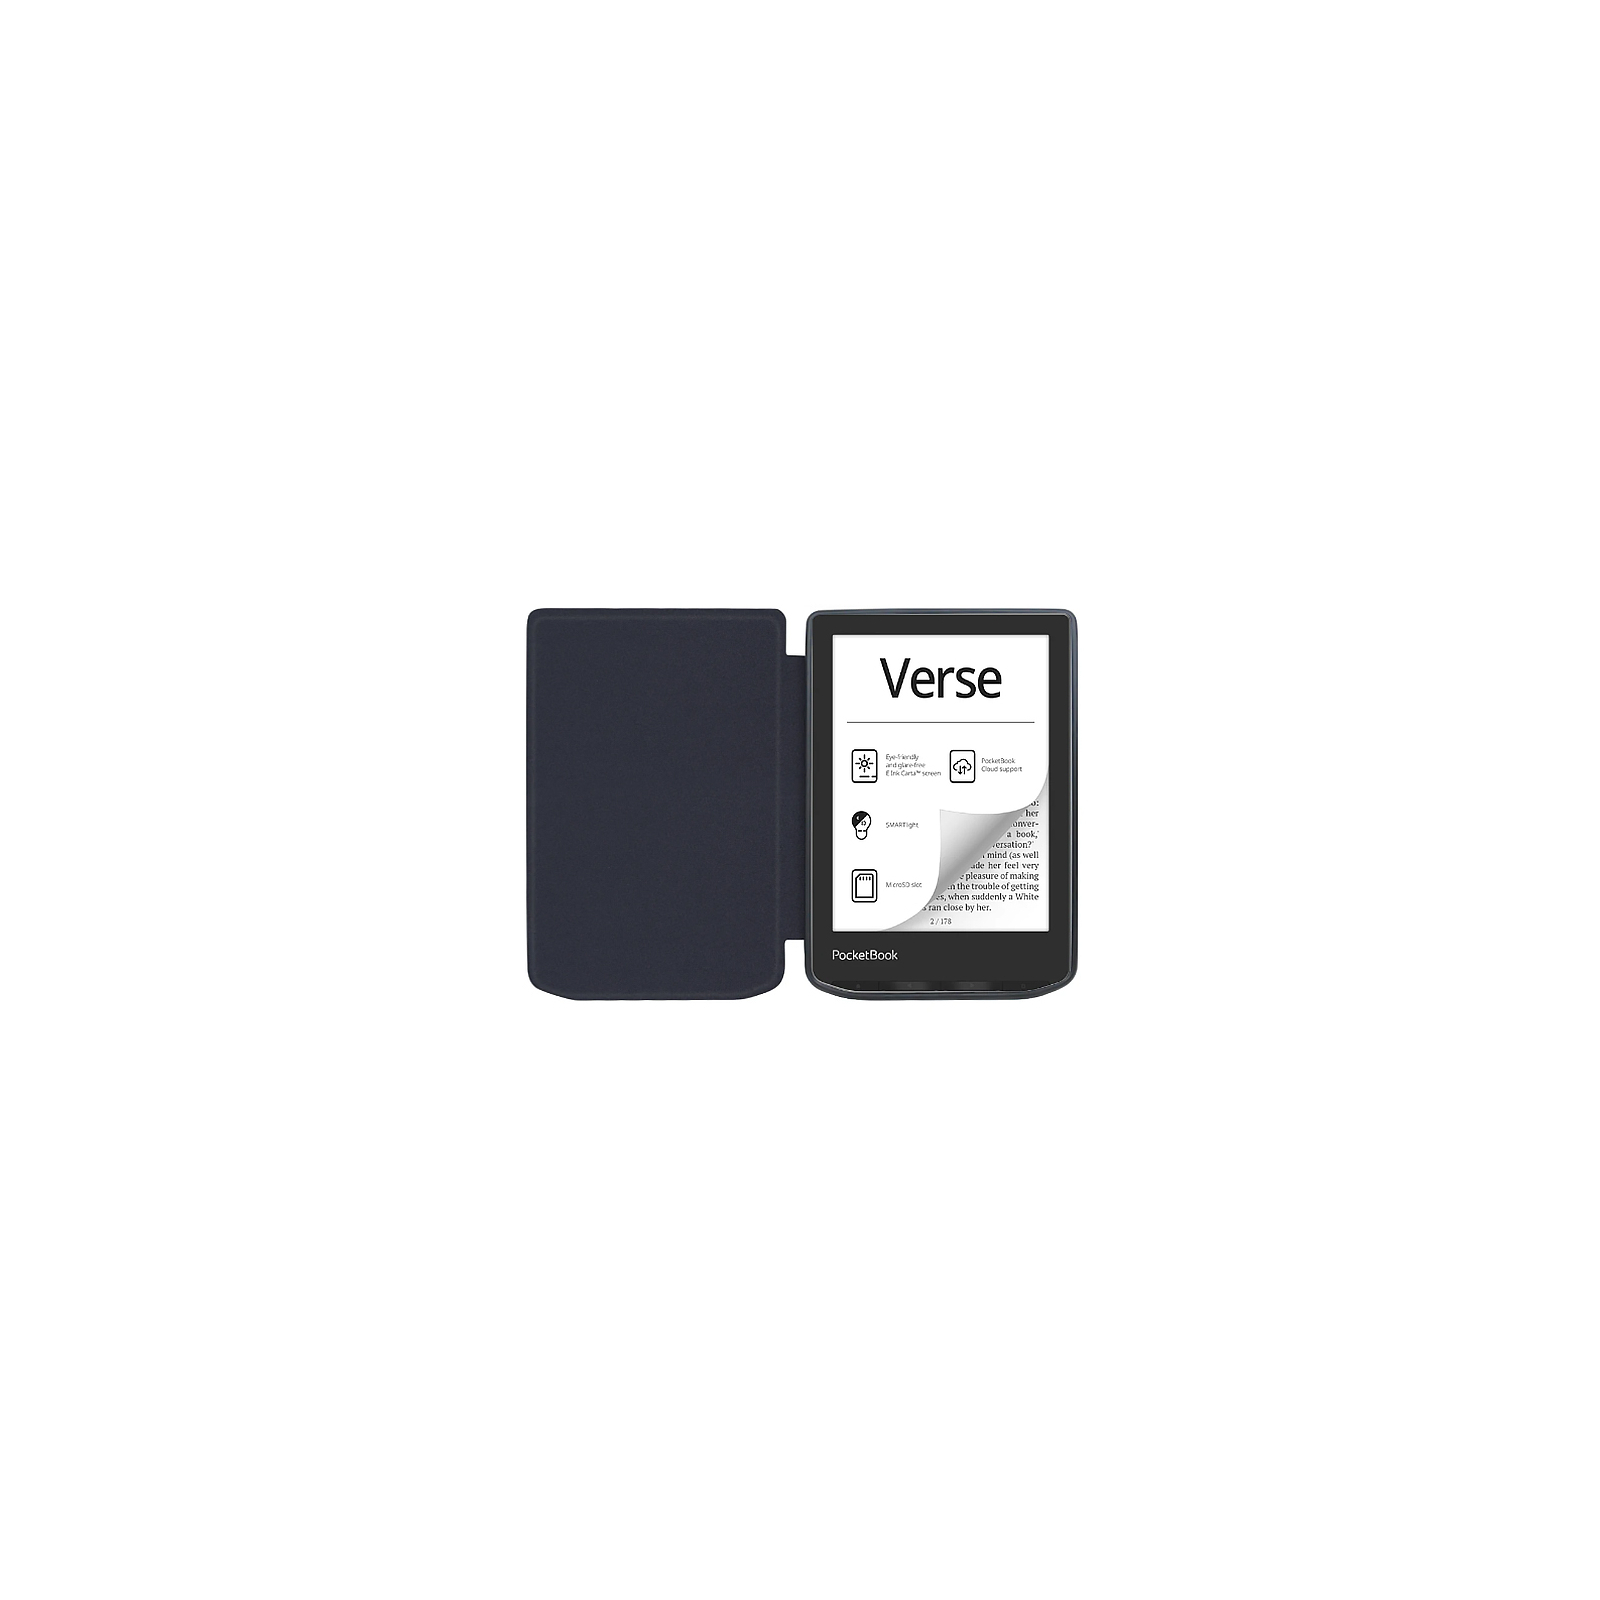 Чохол до електронної книги BeCover Smart Case PocketBook 629 Verse / 634 Verse Pro 6" Spring (710981) зображення 7